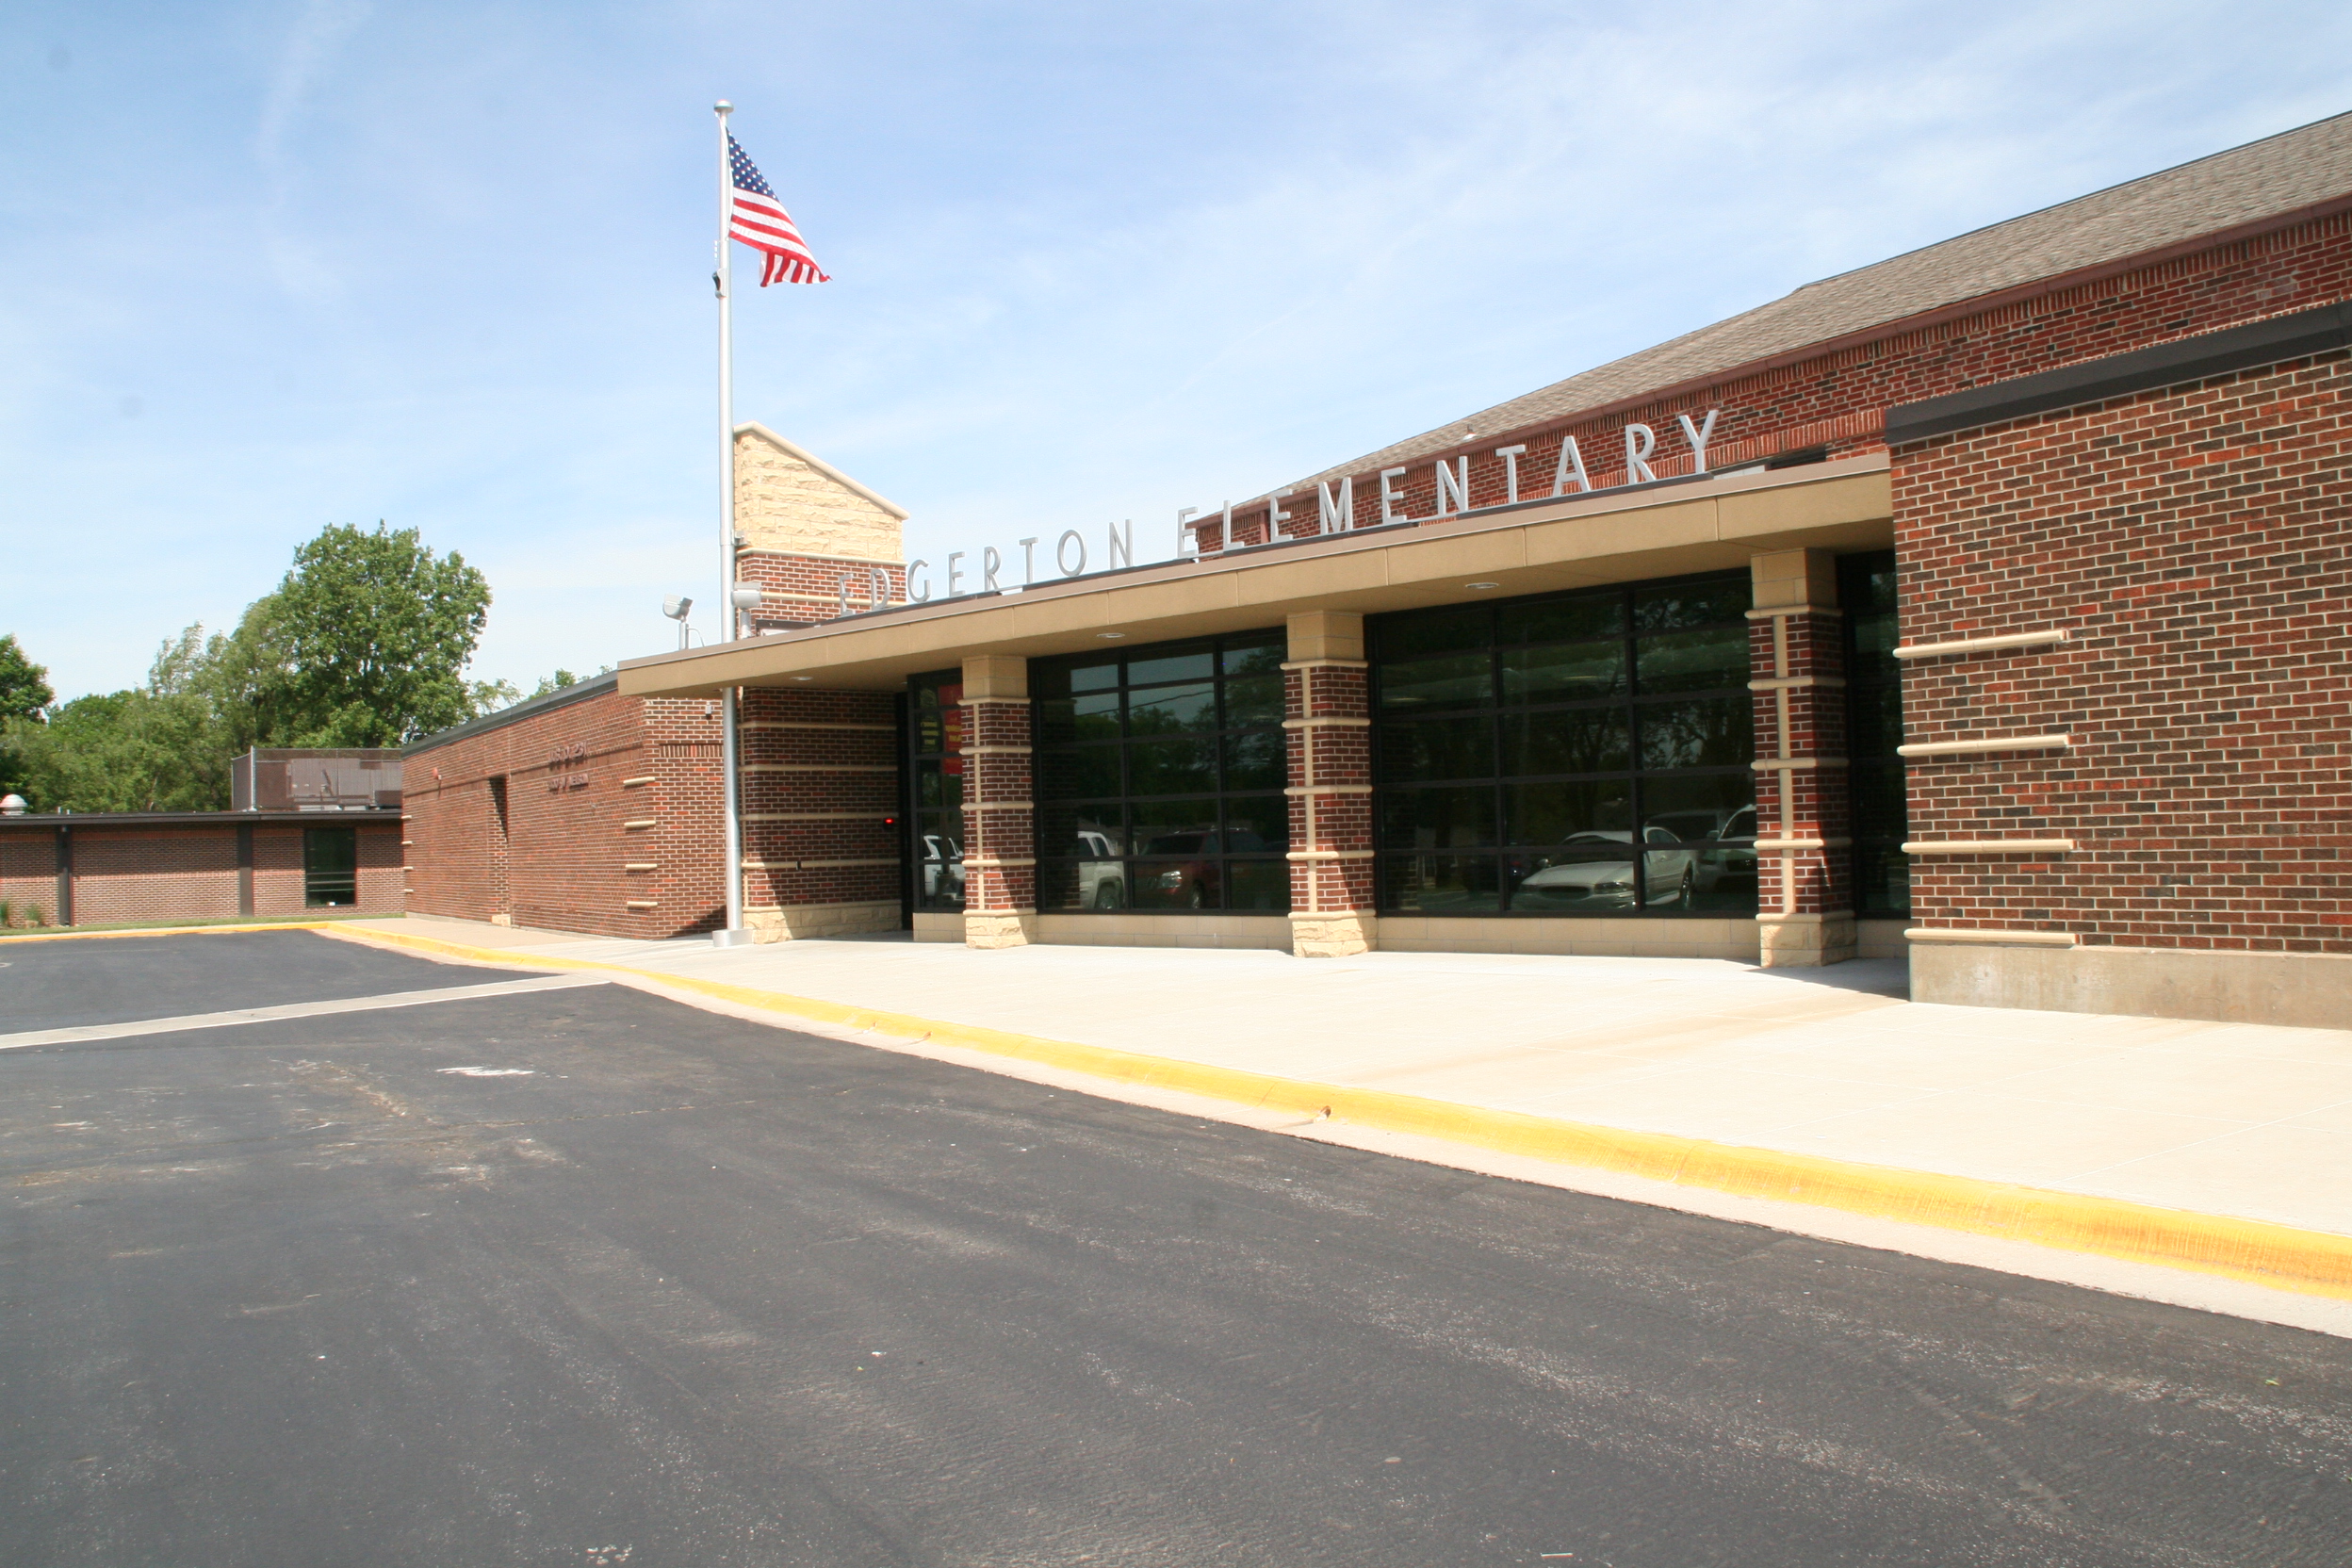 Edgerton Elementary School